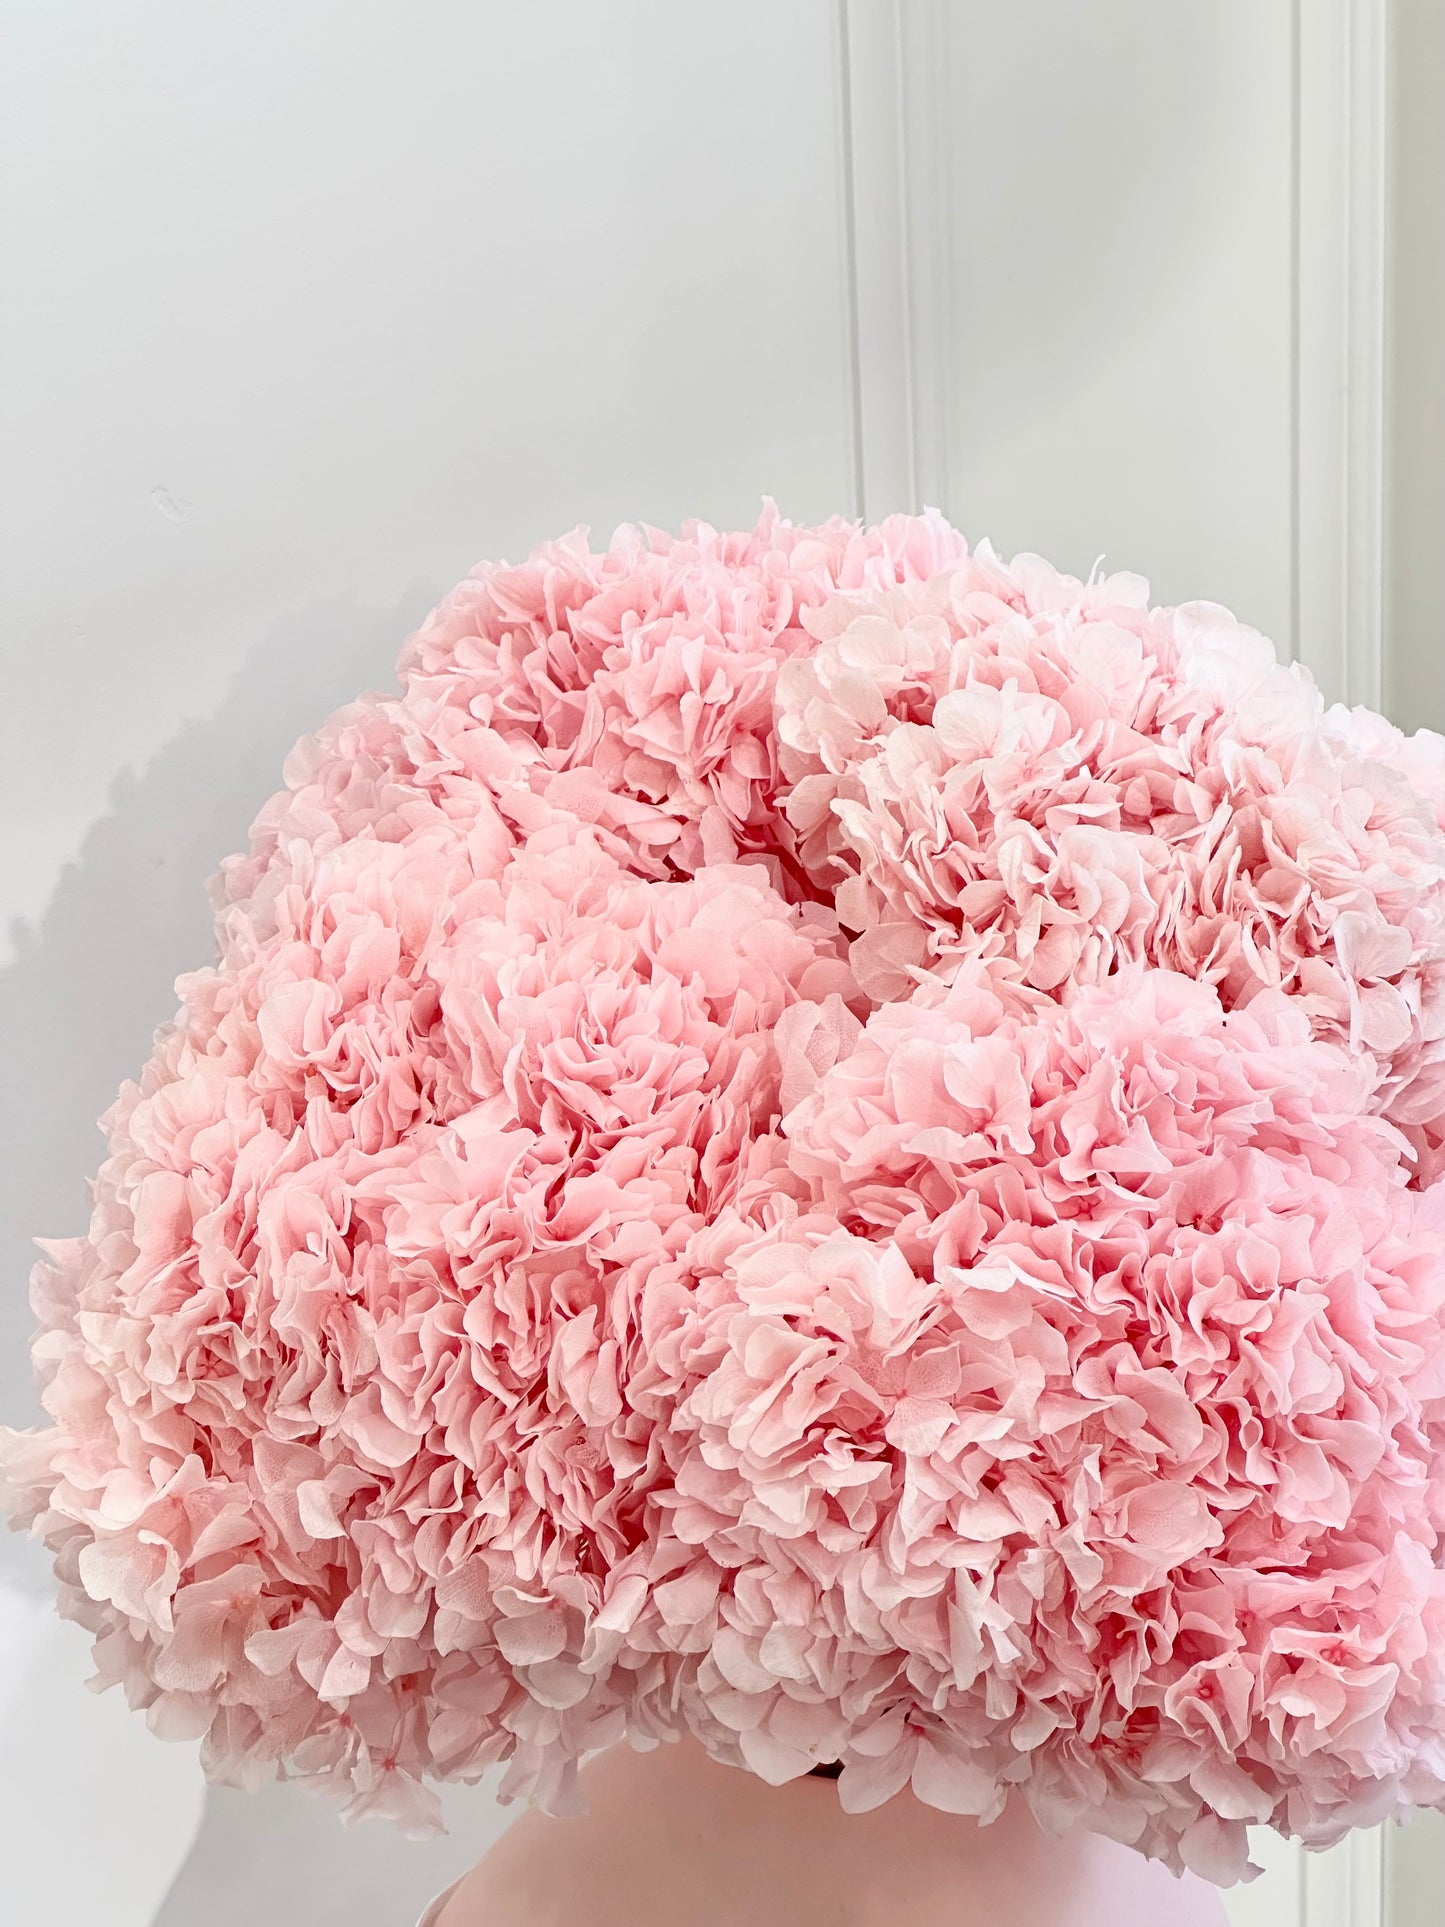 Pink Forever Flowers in Harmie Vase